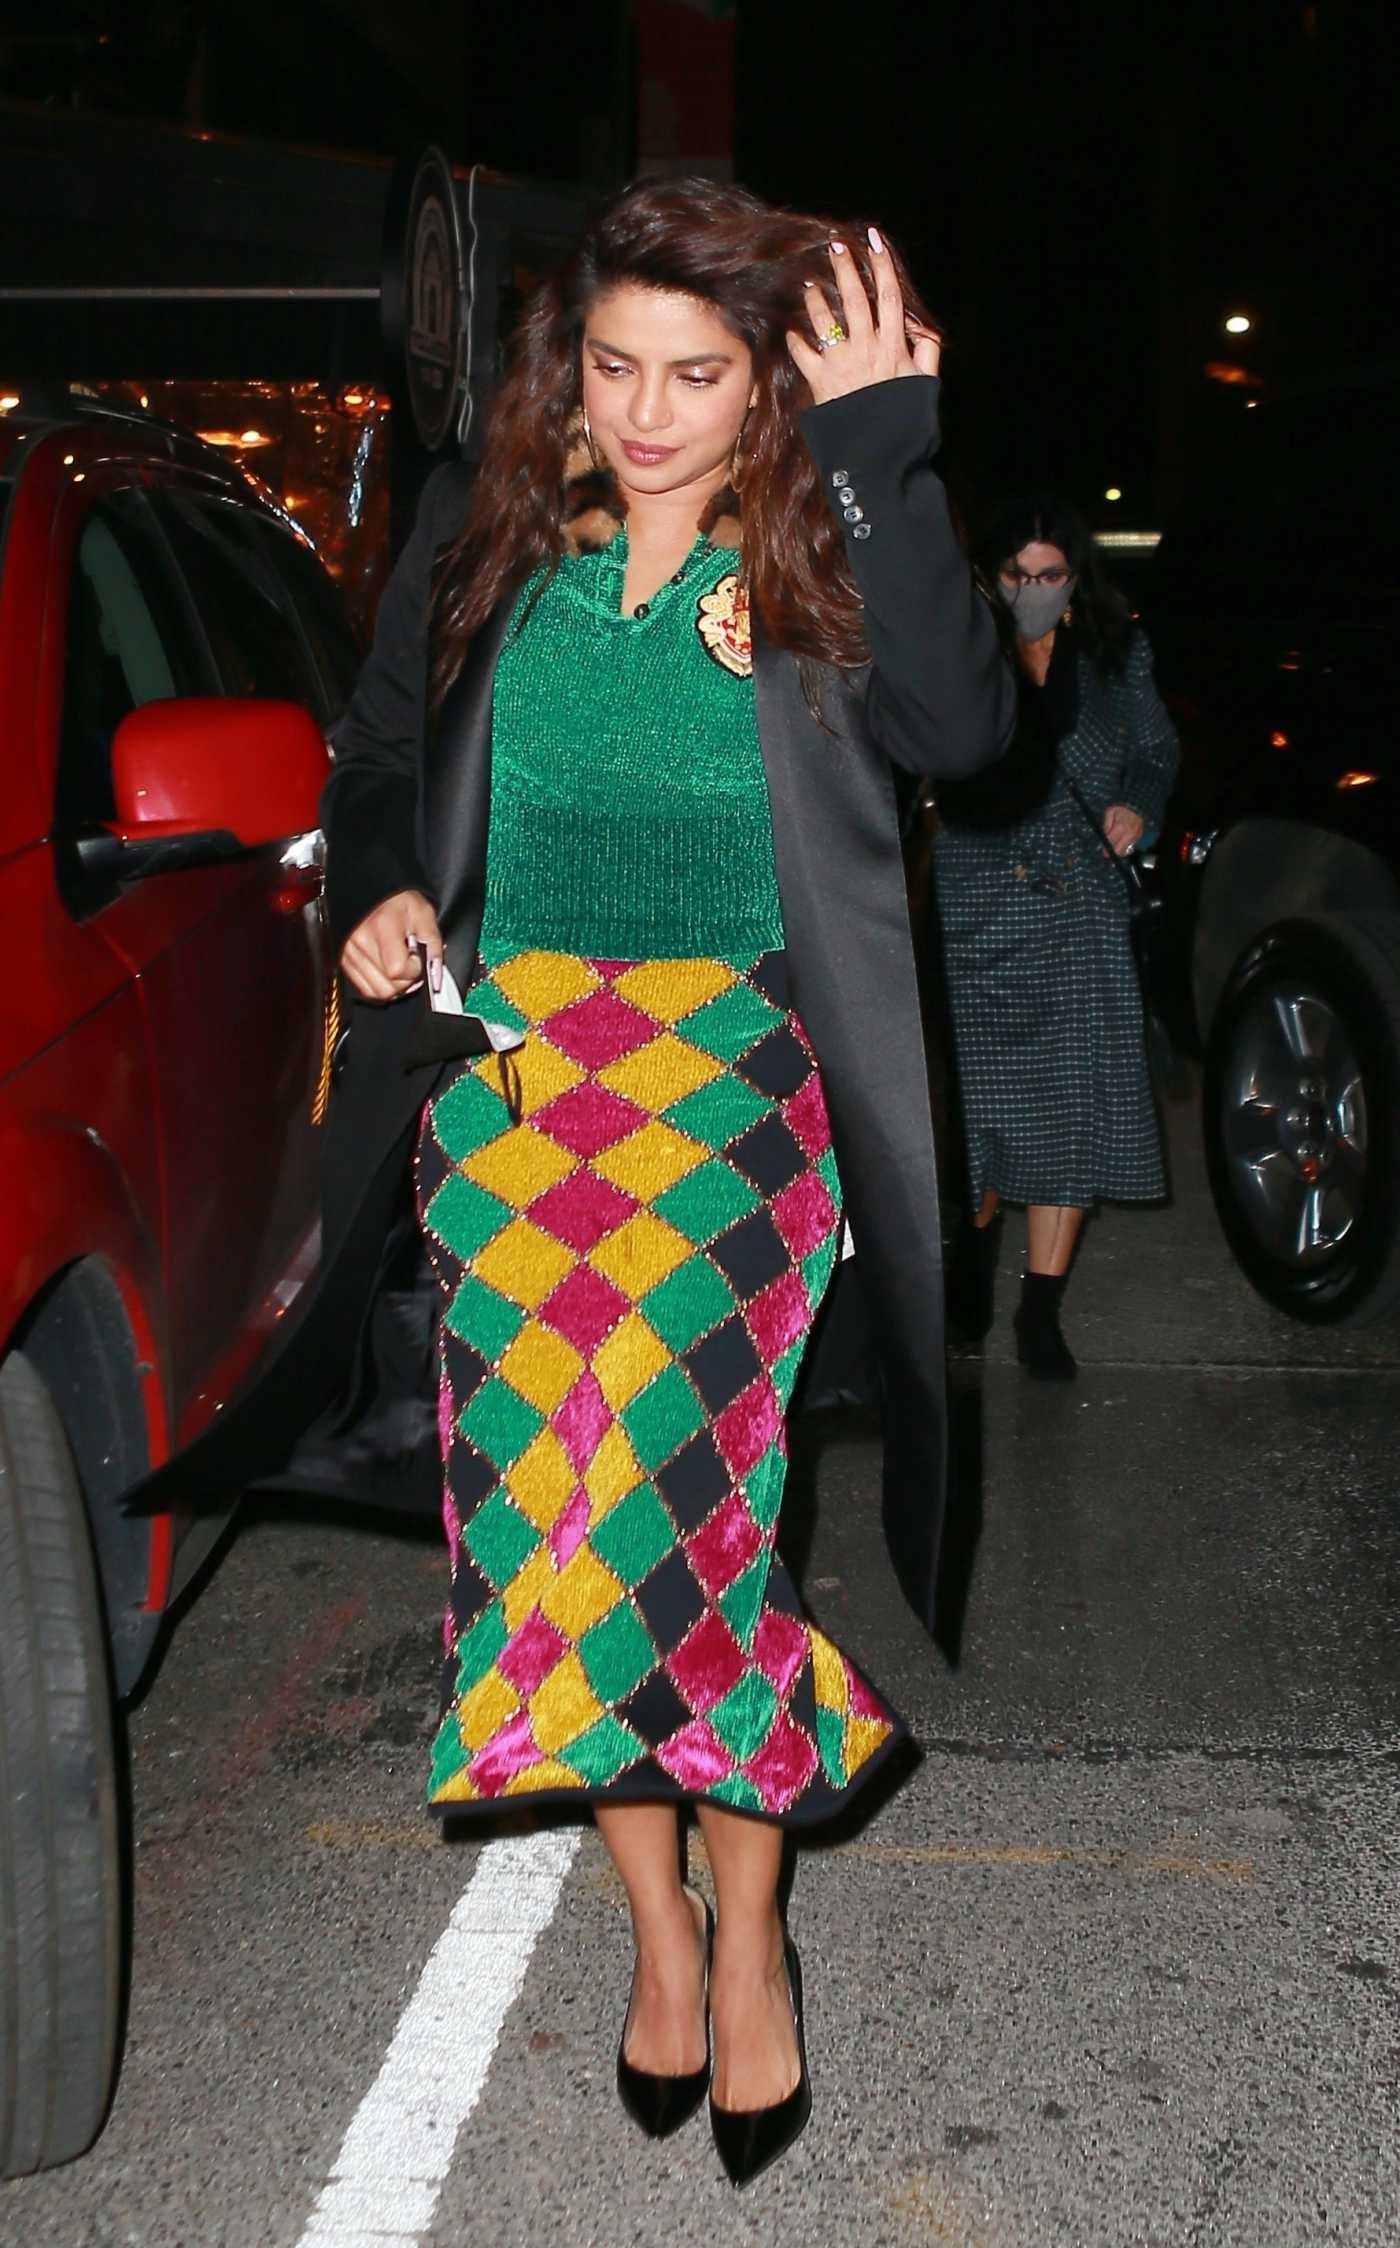 Priyanka Chopra in a Patterned Skirt Heads to Dinner at SONA Restaurant in New York City 12/14/2021